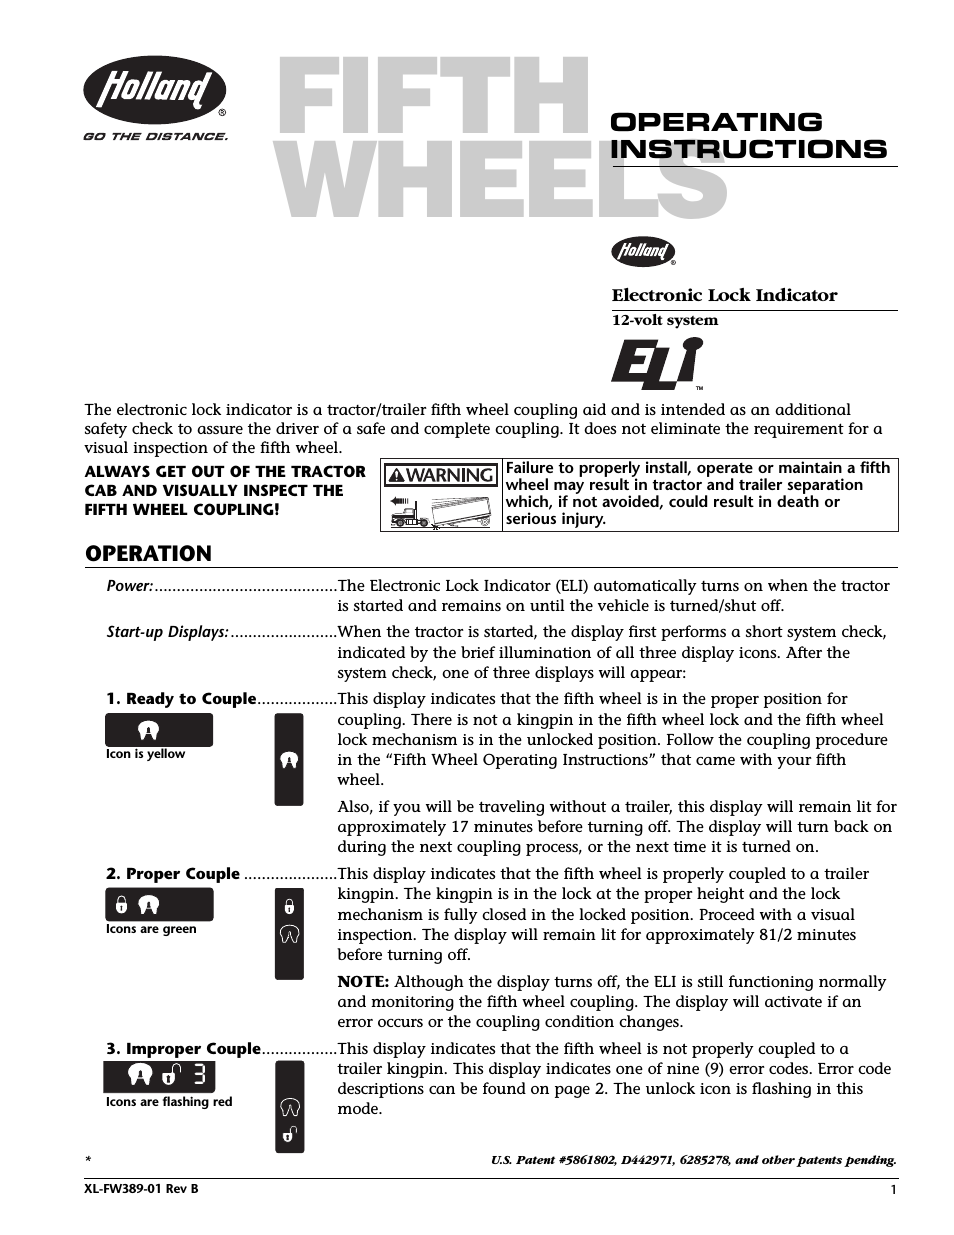 XL-FW389-01 Electronic Lock Indicator 12-volt